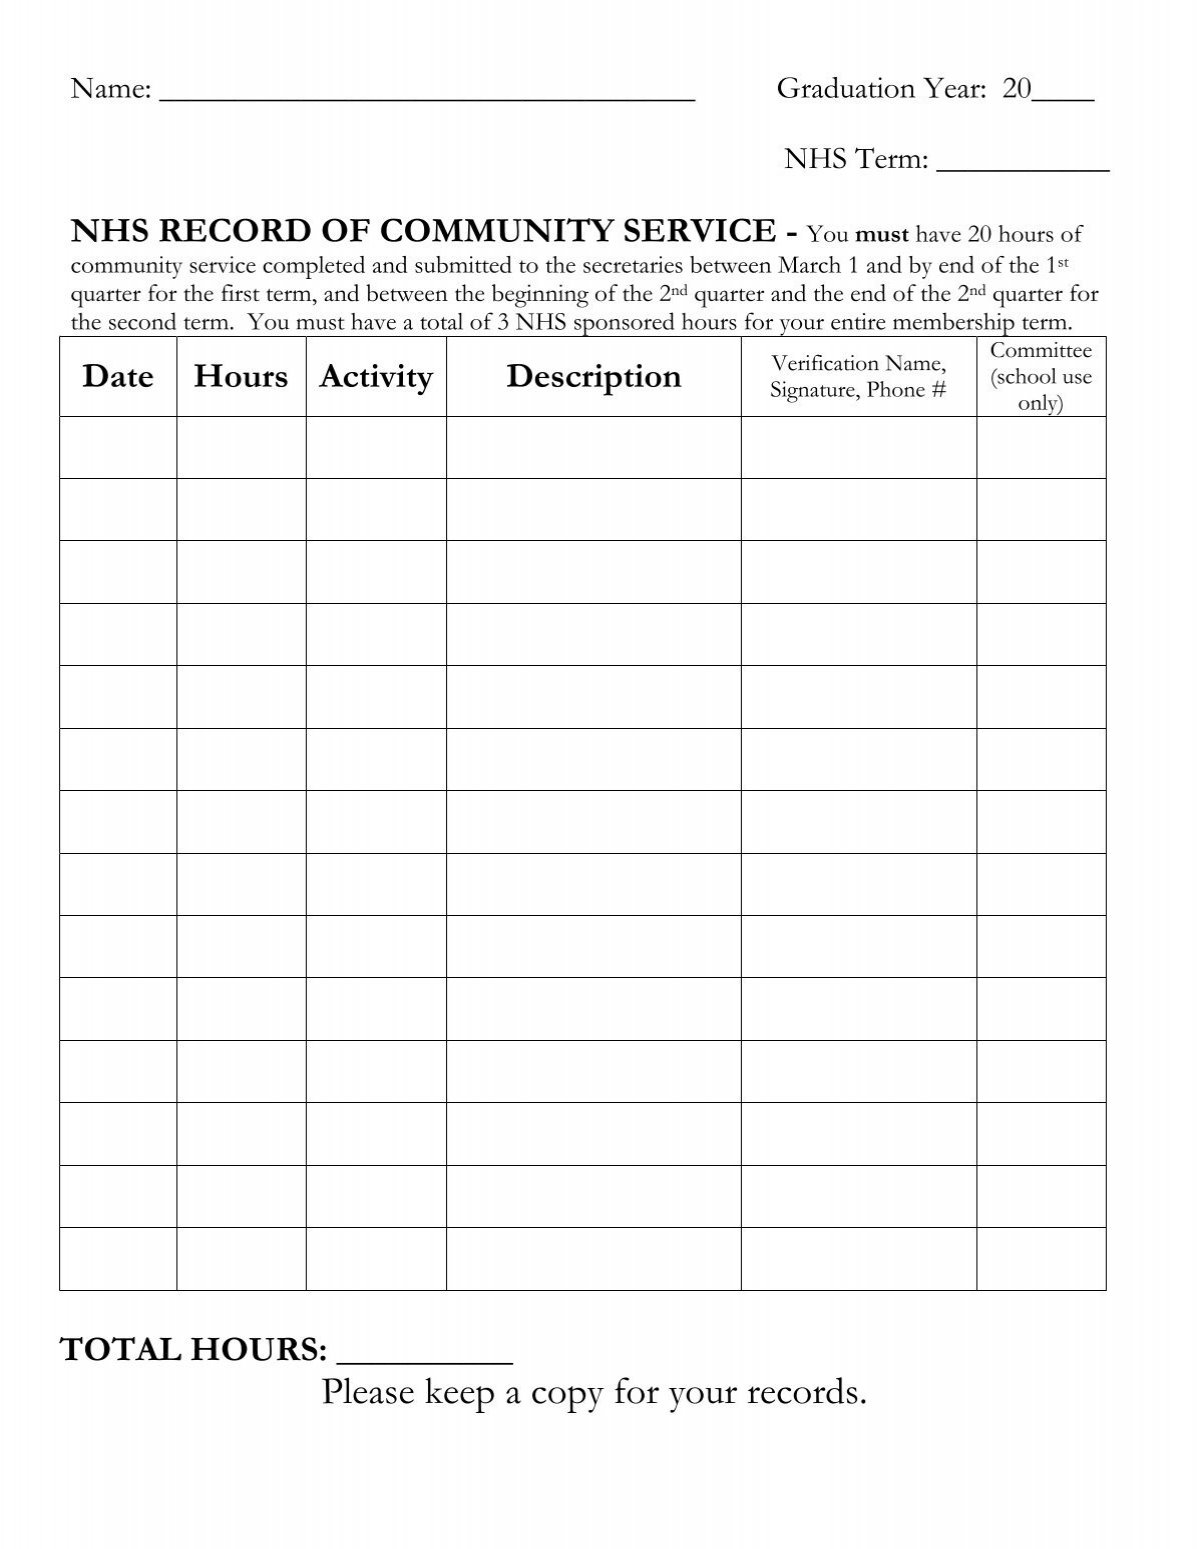 nhs community service record sheet pdf